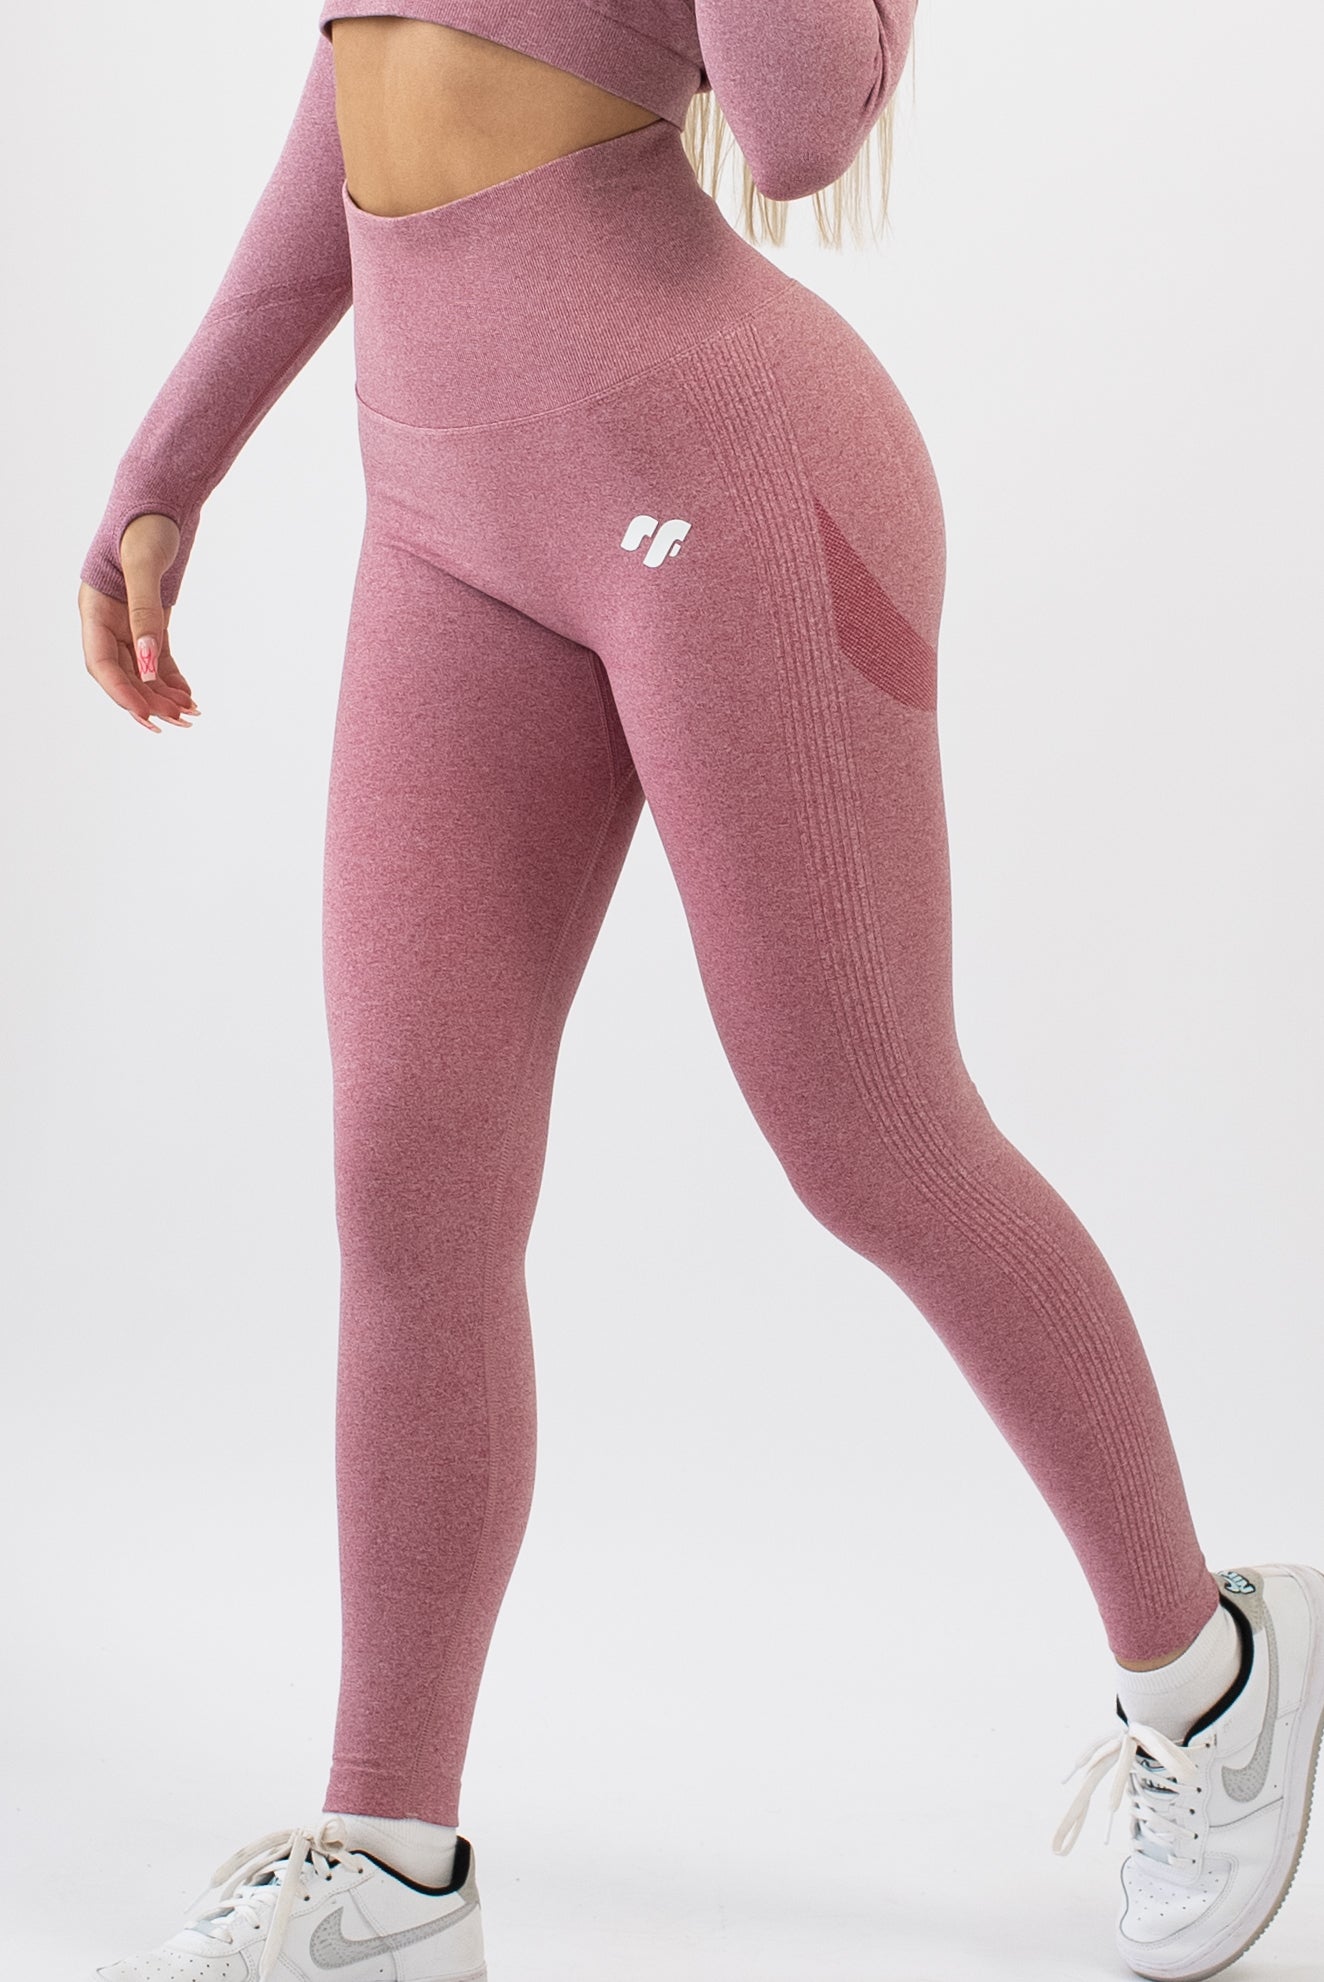 V3 Pink Marl Define Seamless Scrunch Leggings – IT LOOKS FIT